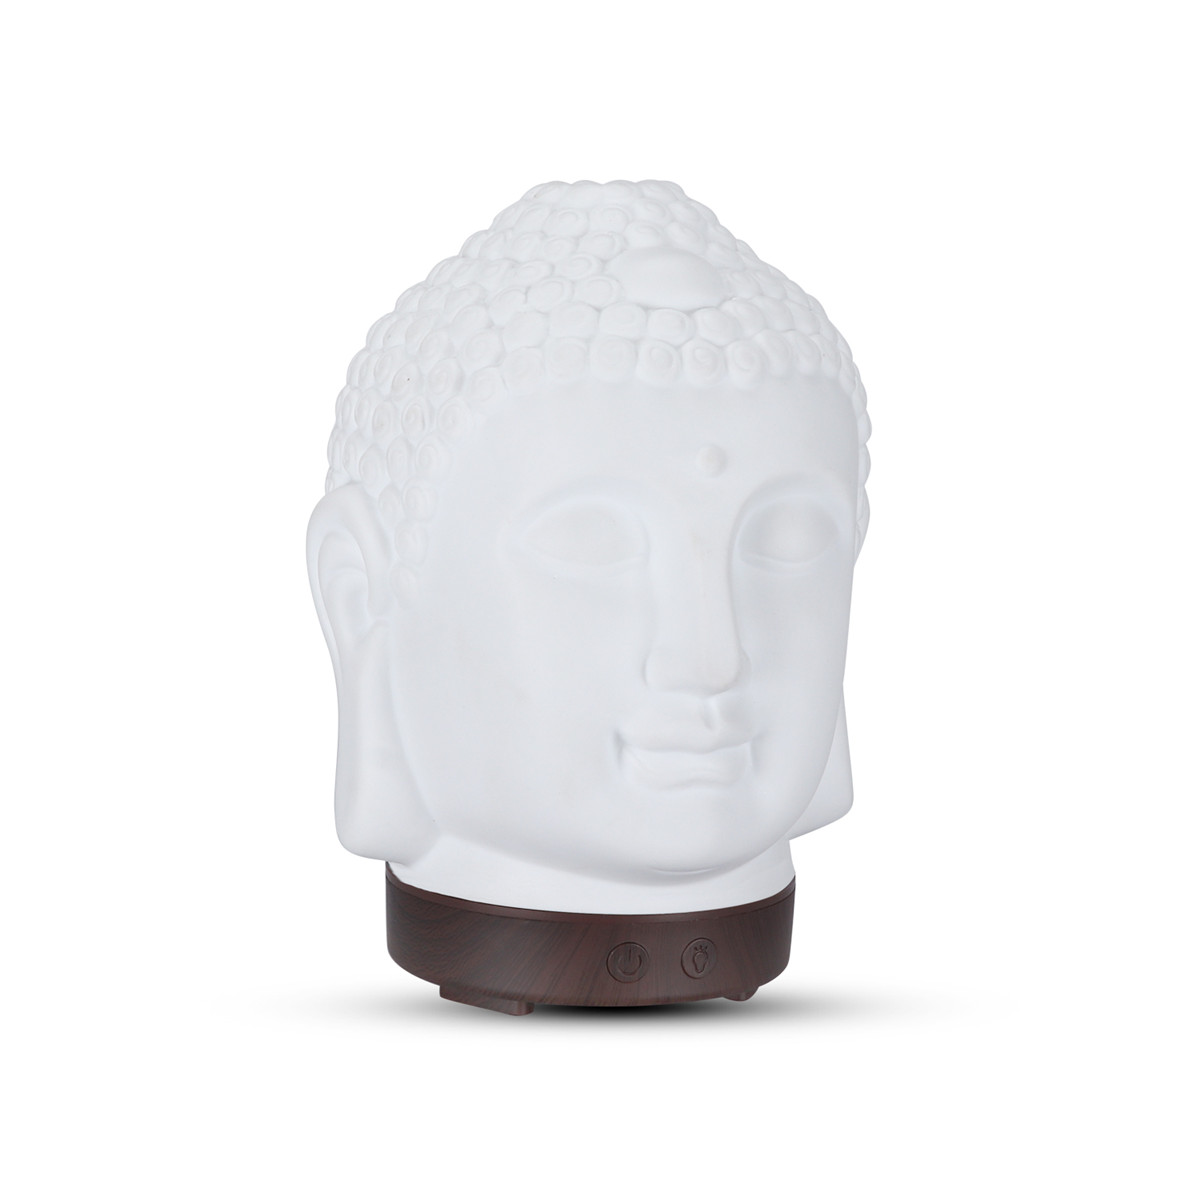 buddha aroma diffuser